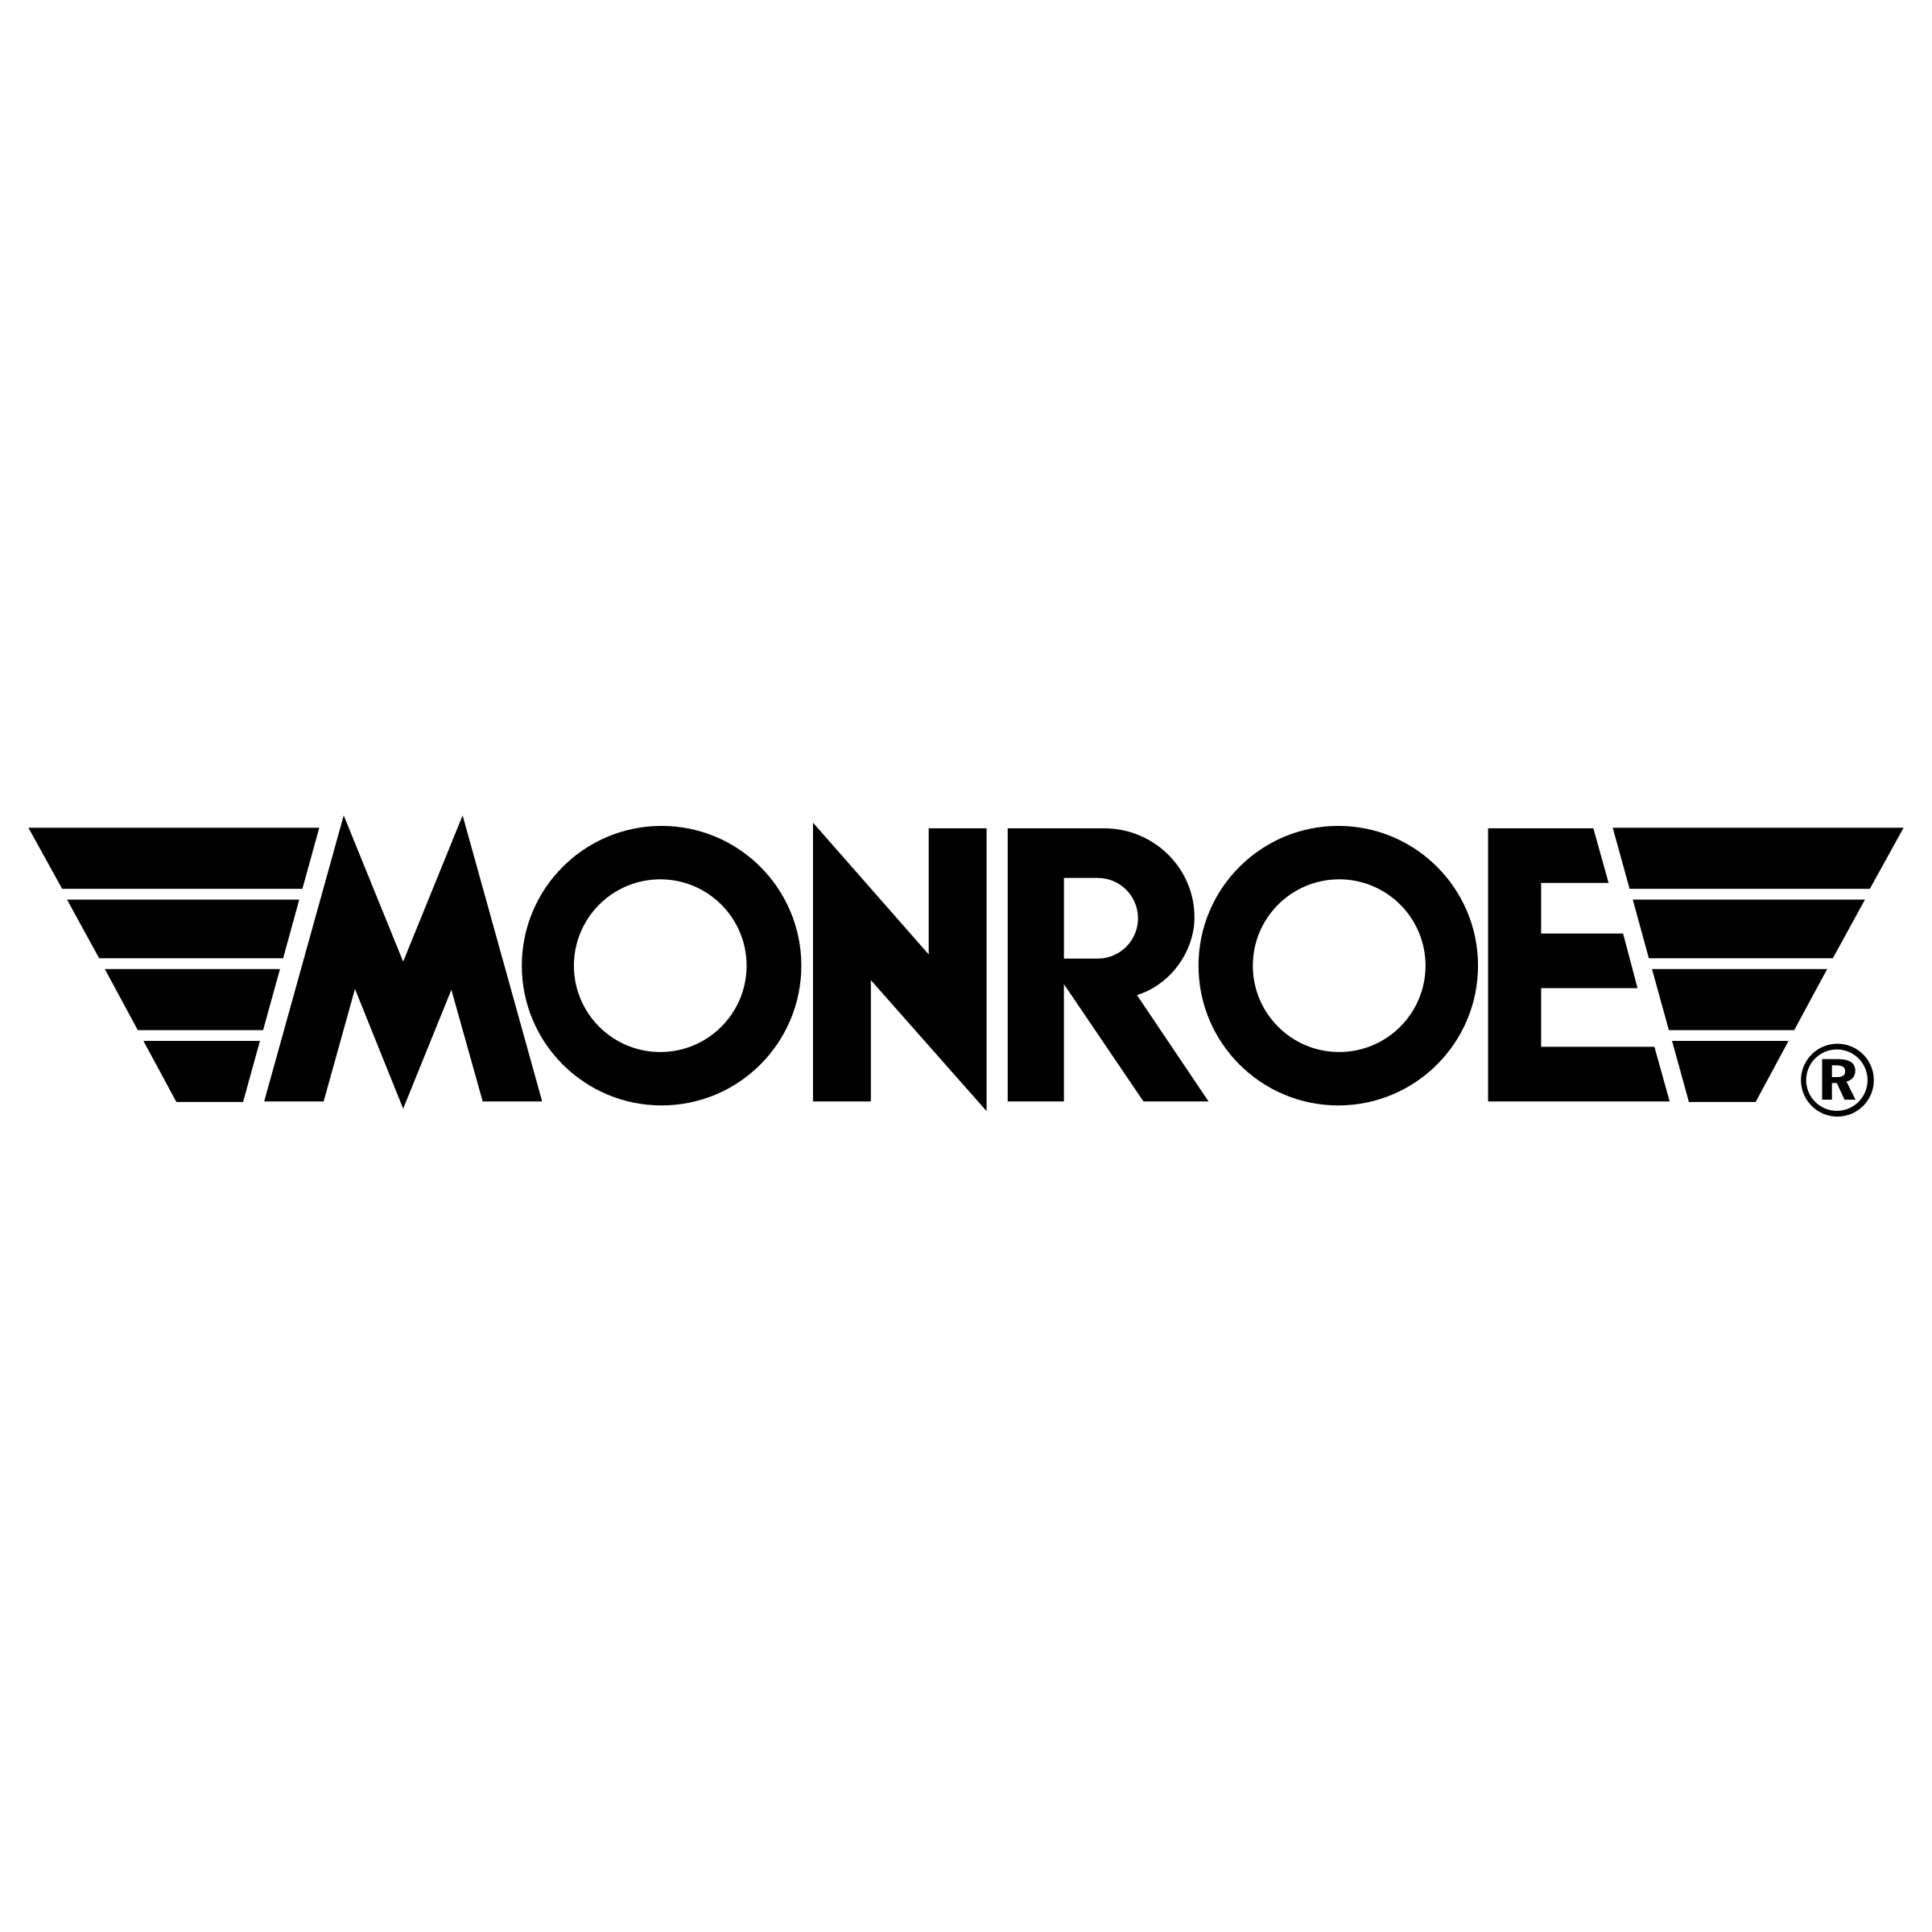 Monroe Logo - Monroe Logo PNG Transparent & SVG Vector